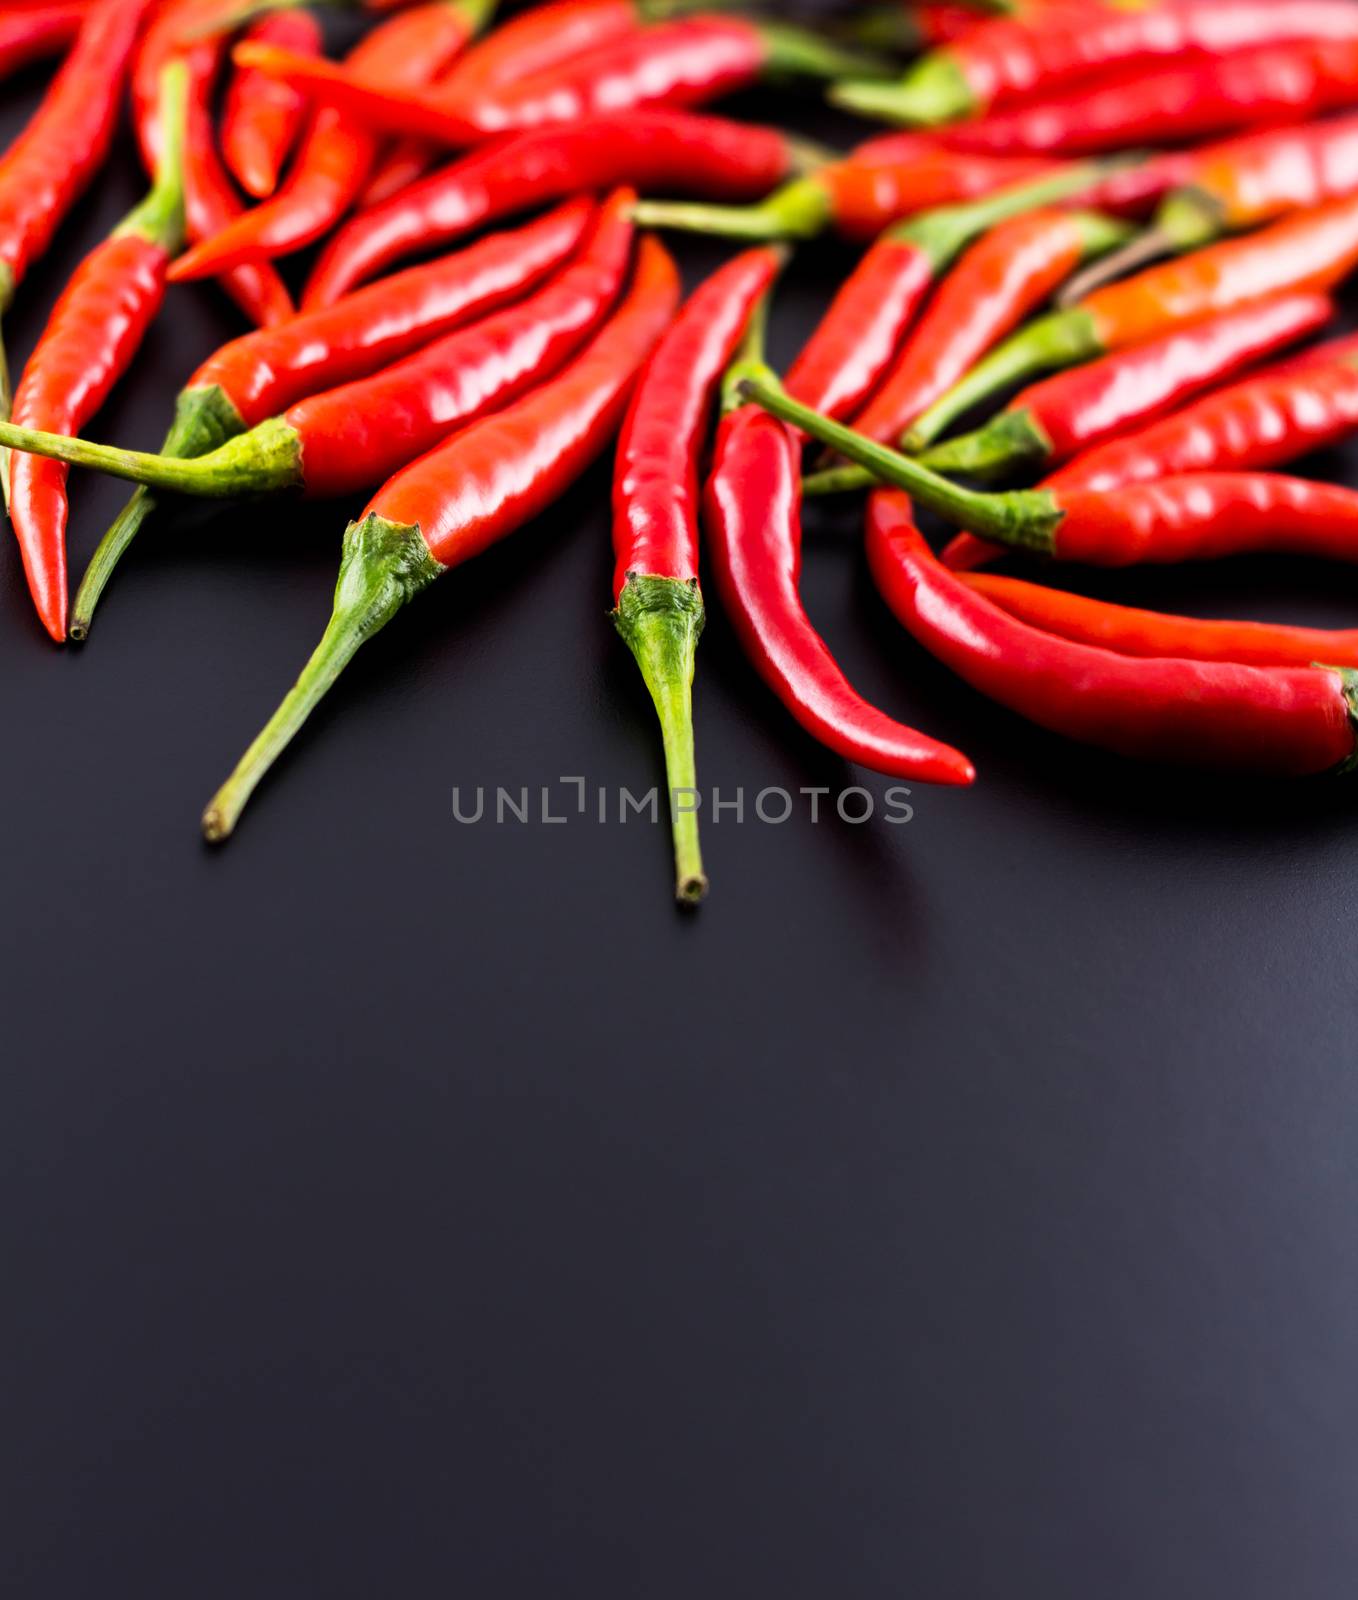 Fresh hot chili on black background, selective focus